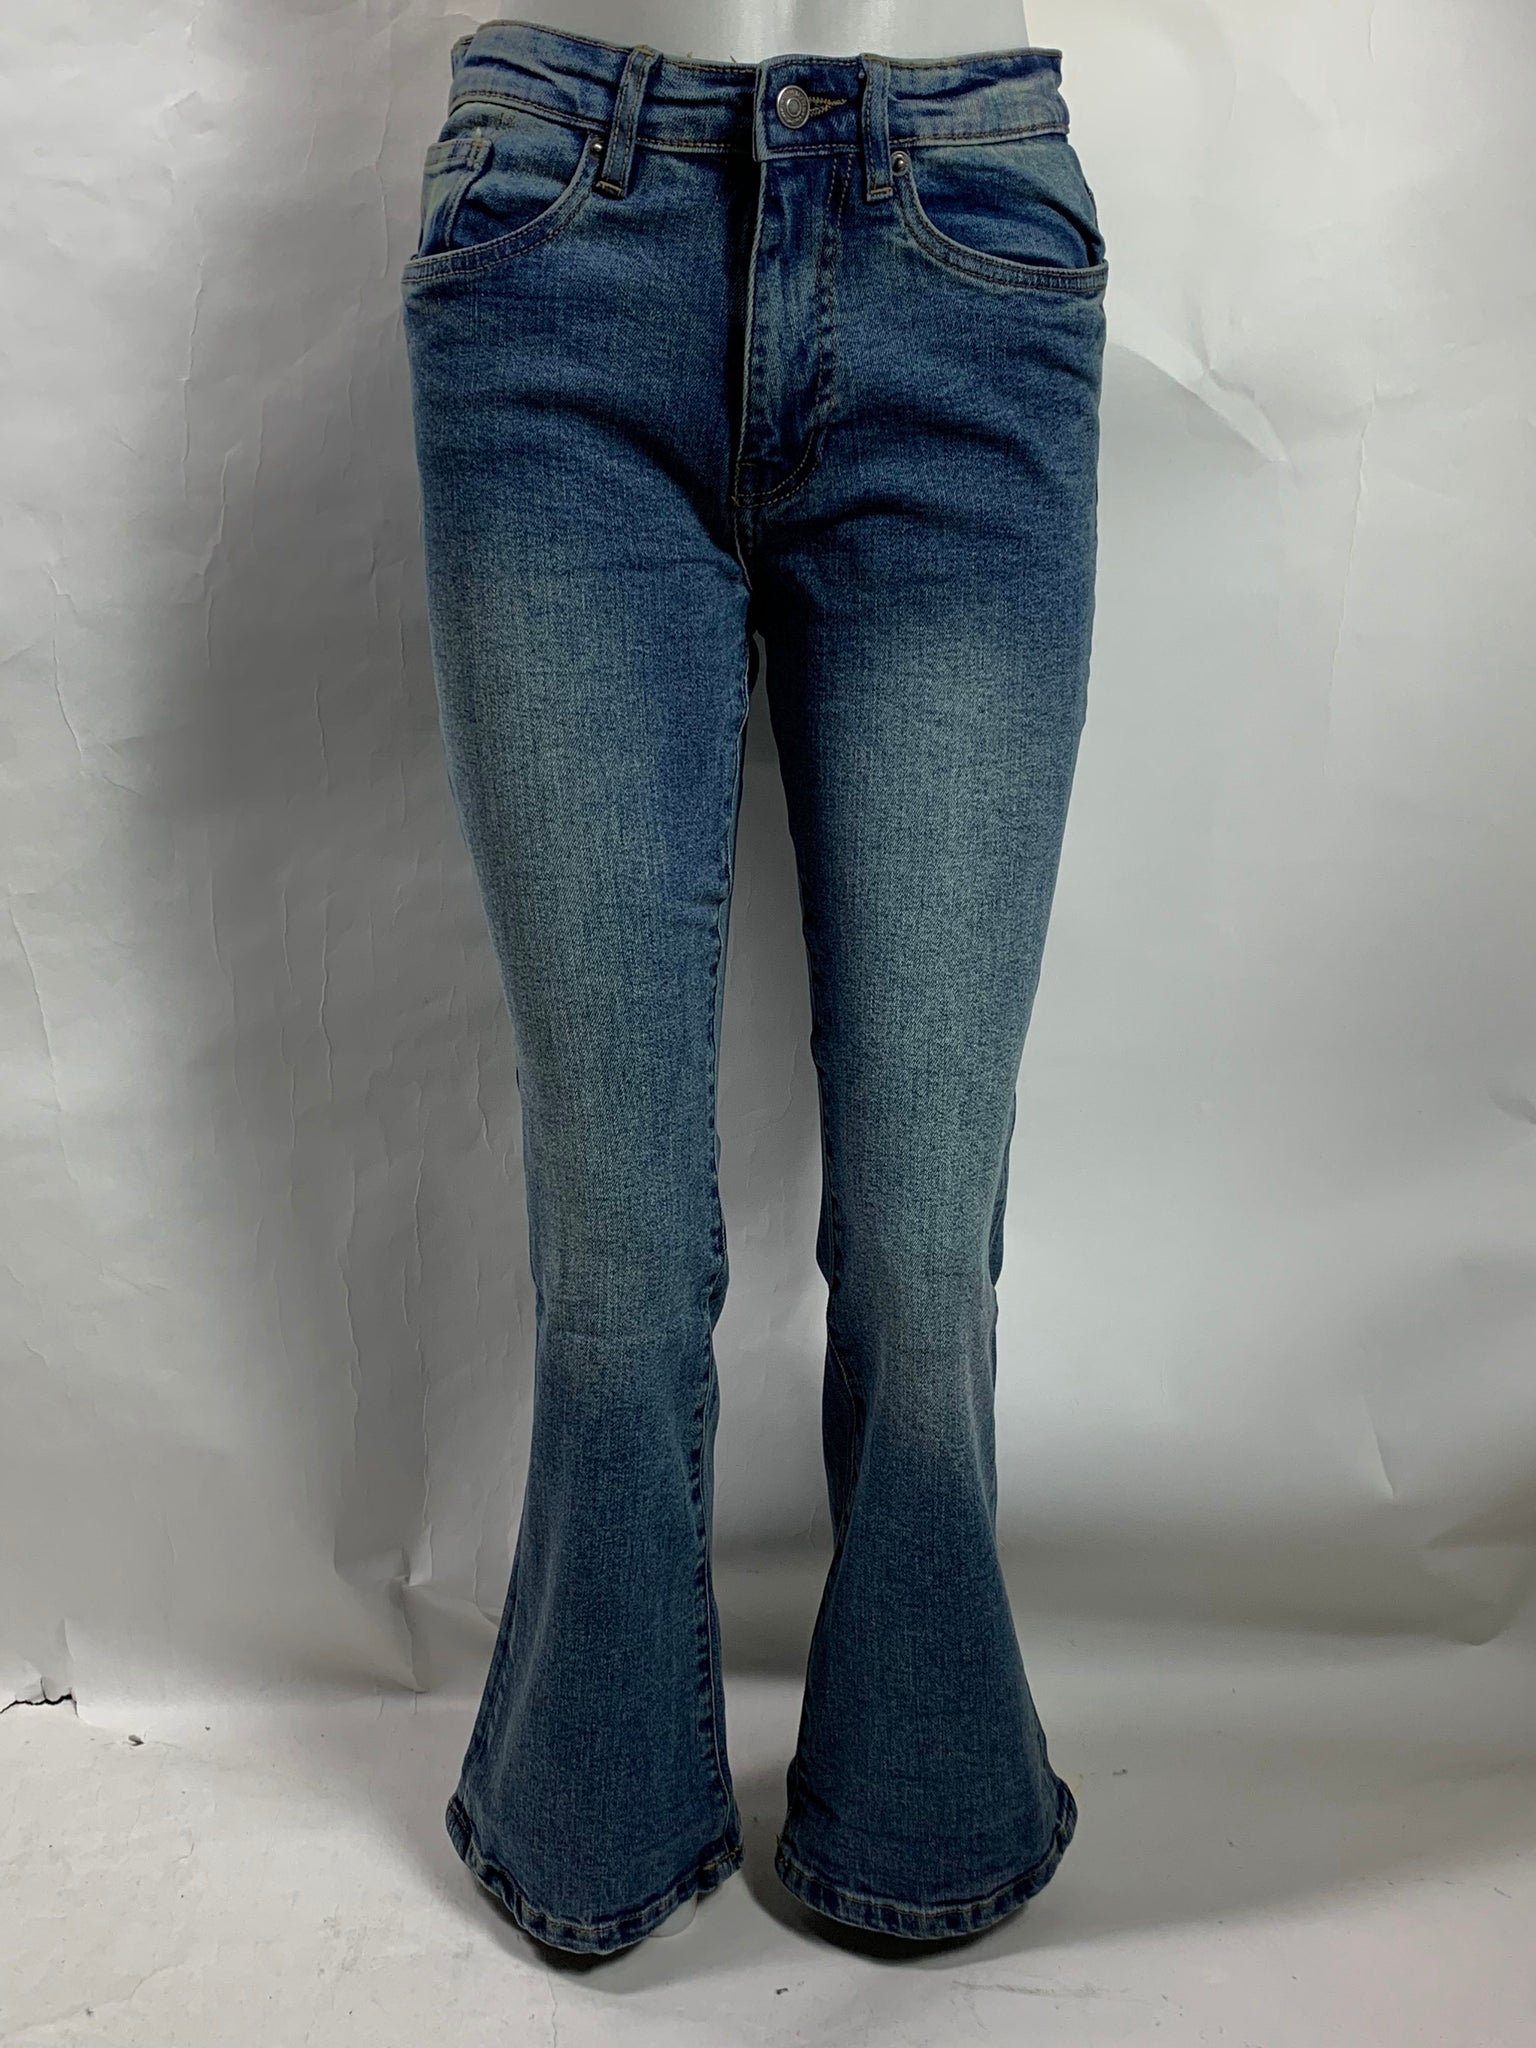 1970s Blue Jeans by K-Mart, 30 Waist